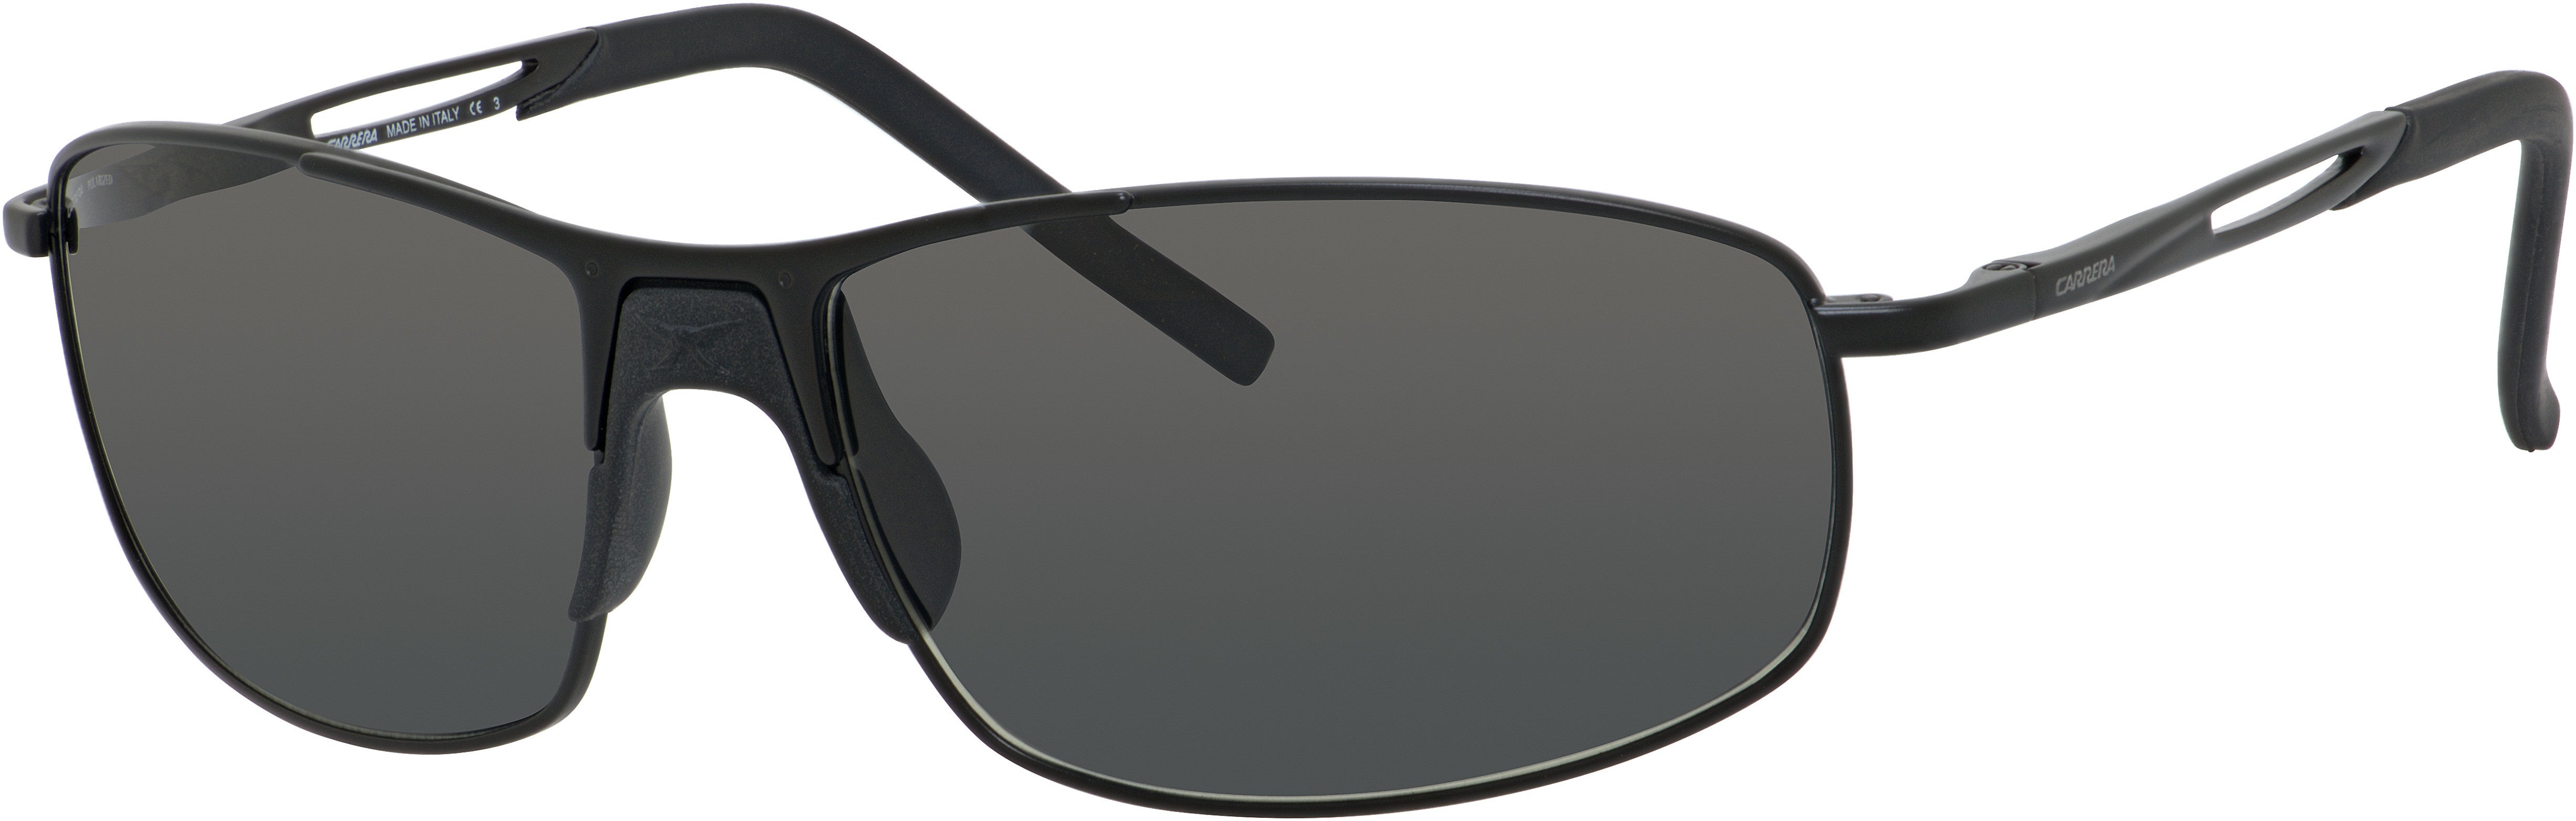 Carrera Huron/S Rectangular Sunglasses 091T-091T  Matte Black (Y2 Gray Polarized)